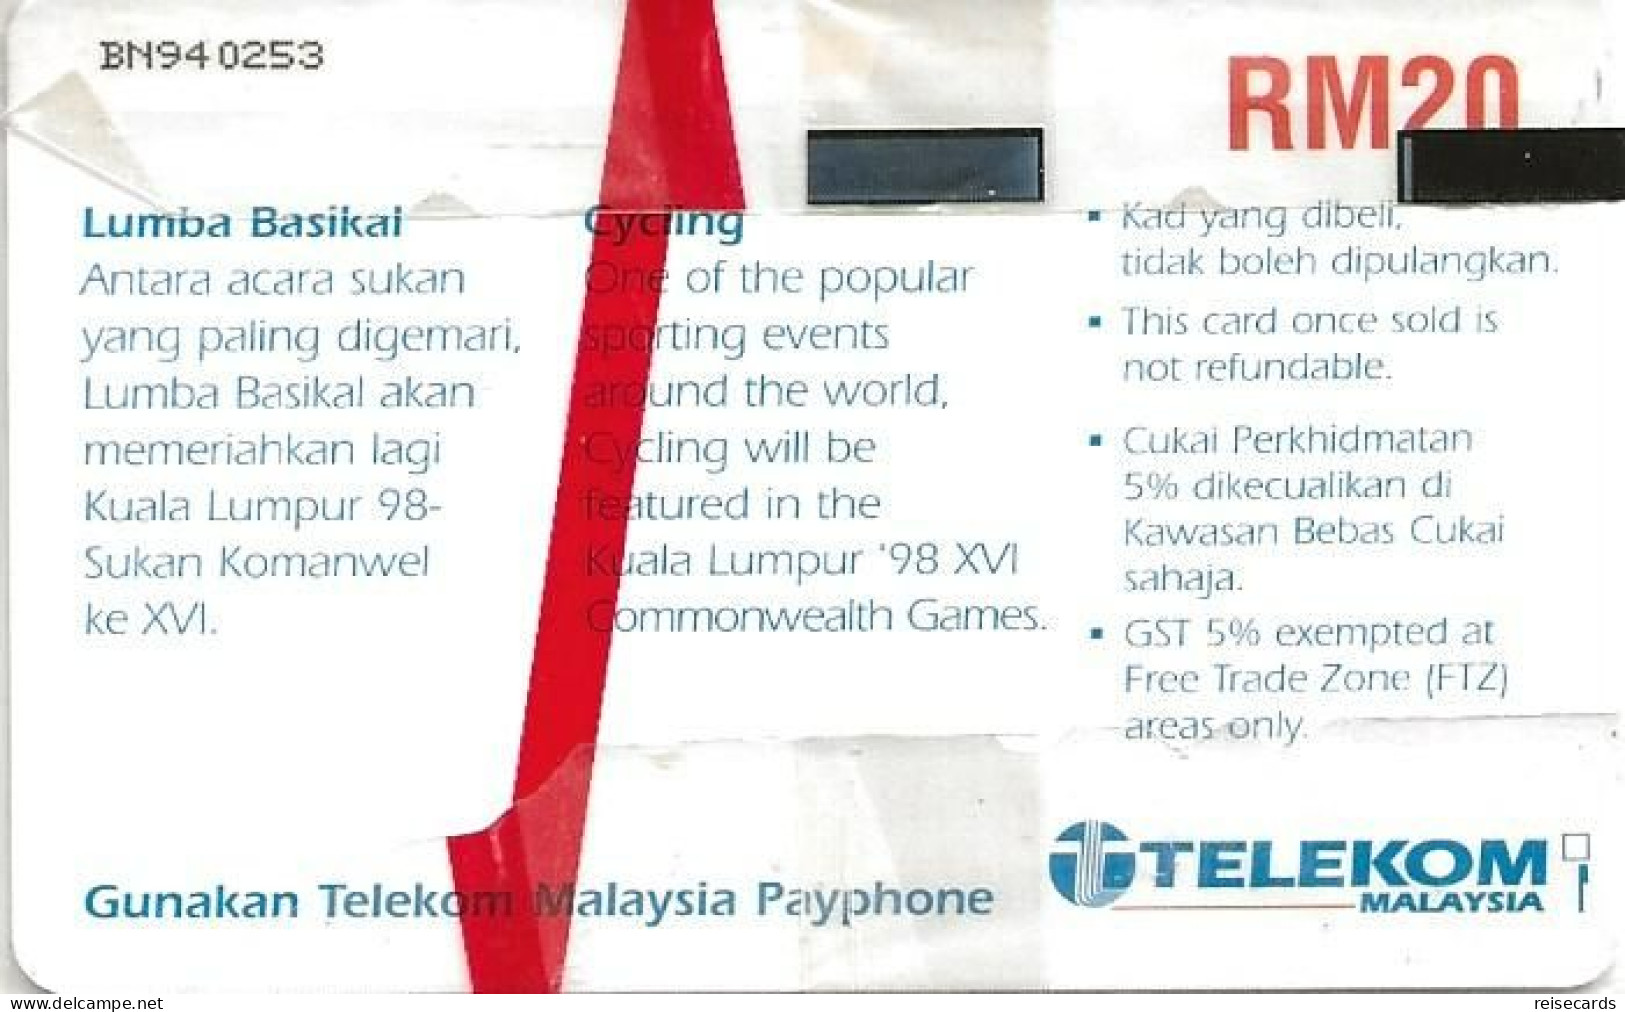 Malaysia: Telekom - Commonwealth Games 98 Kuala Lumpur, Cycling - Malesia